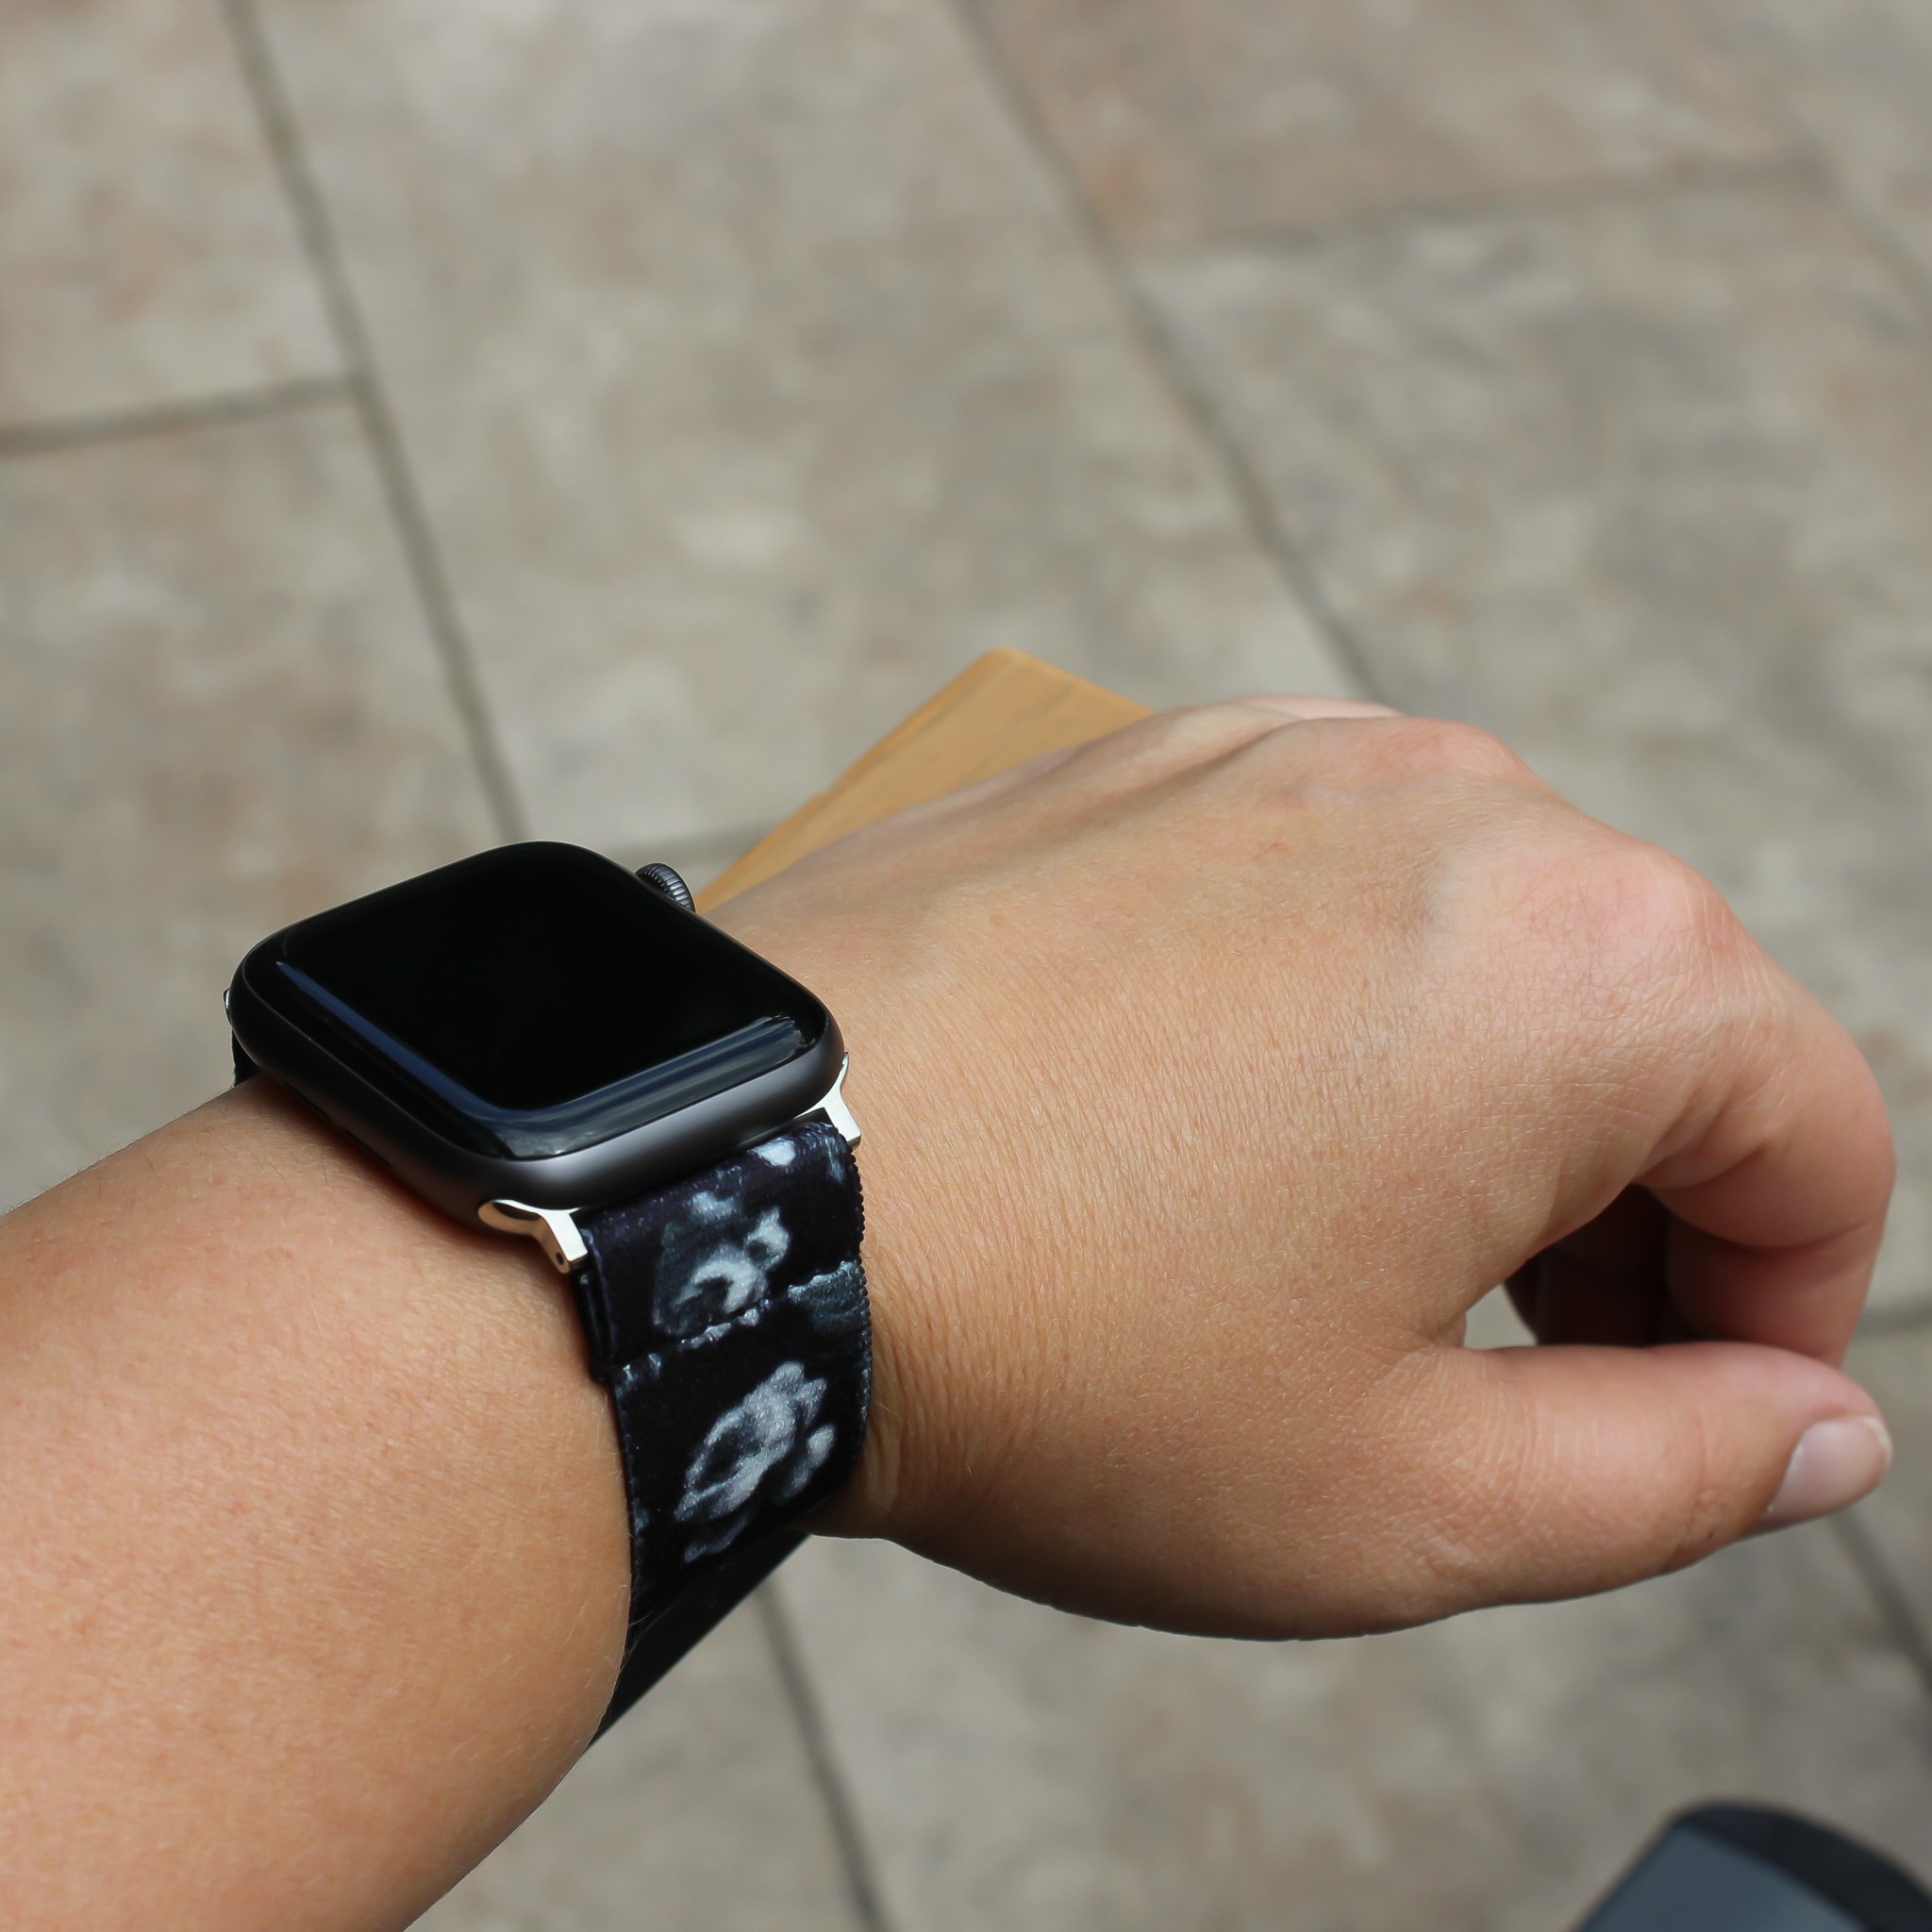 Apple Watch Nylon Armband - Blumen schwarz